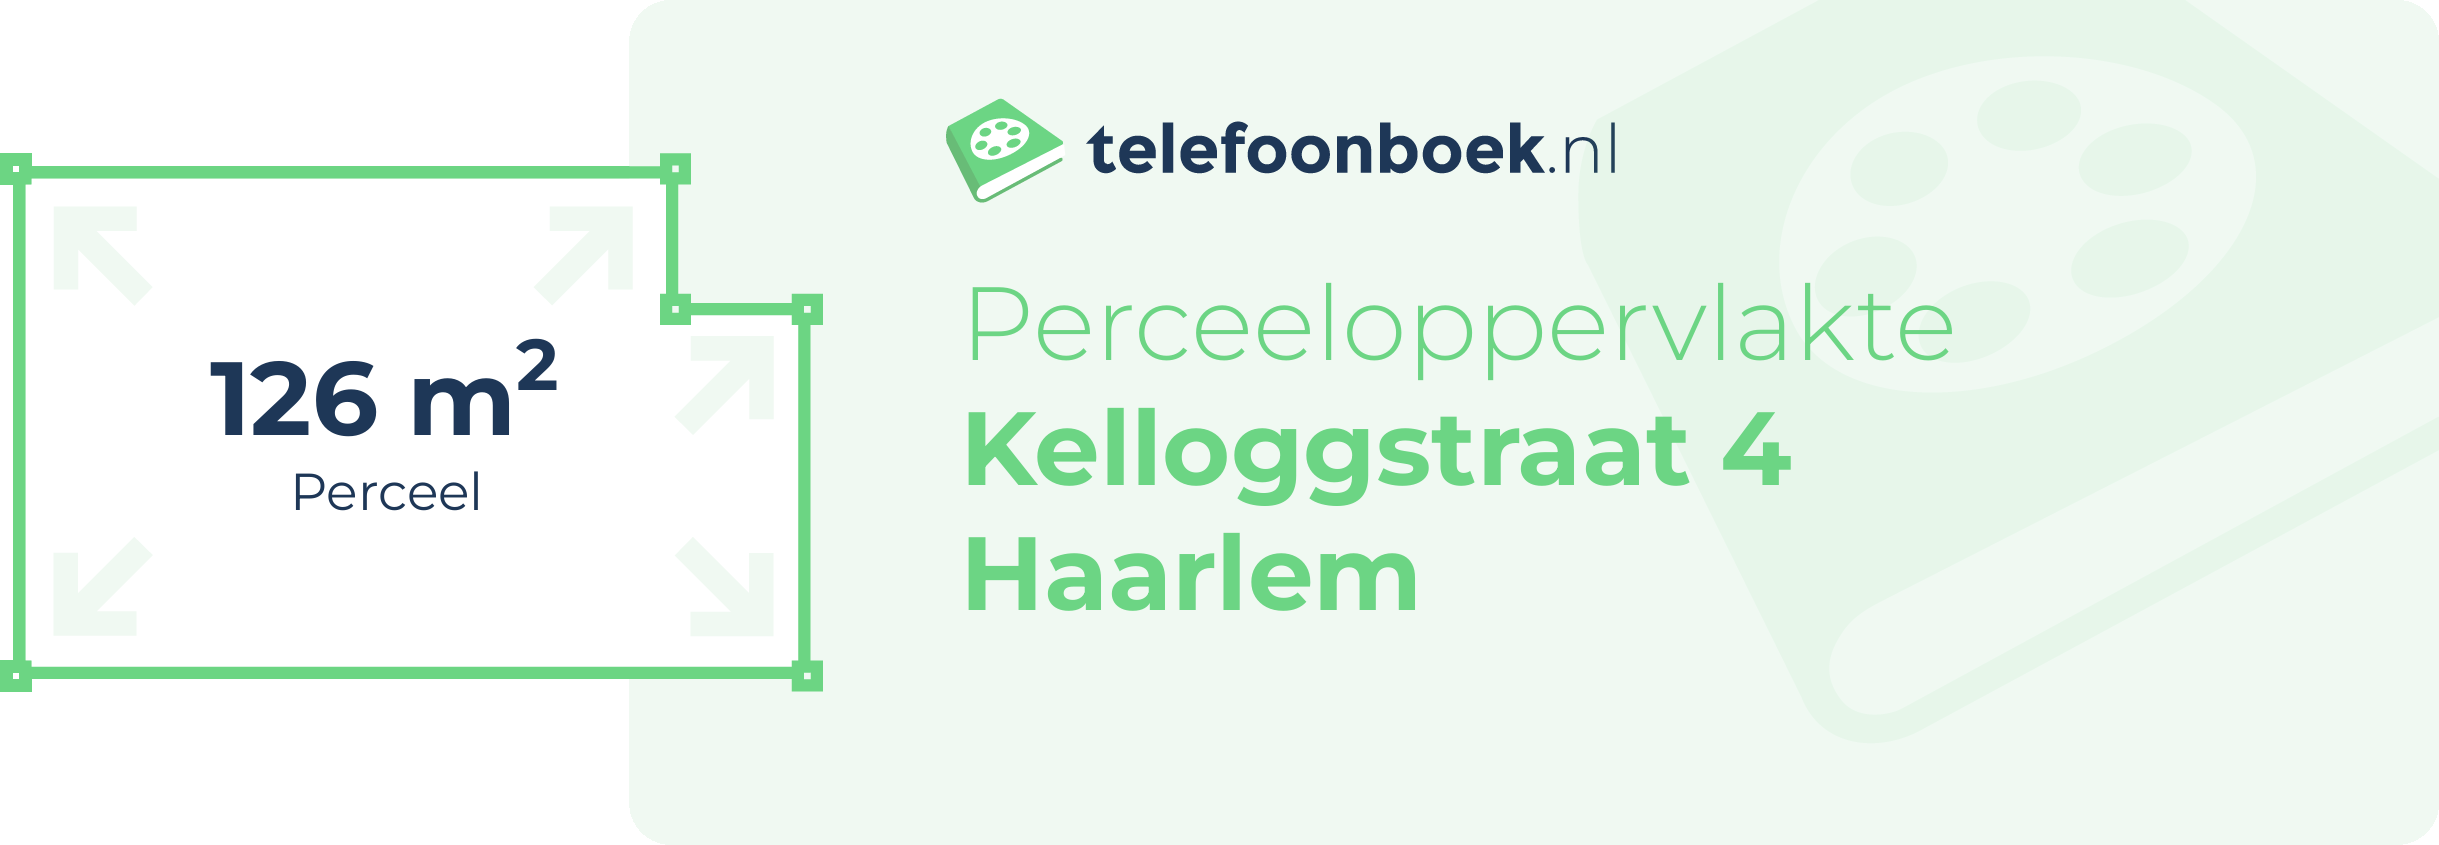 Perceeloppervlakte Kelloggstraat 4 Haarlem